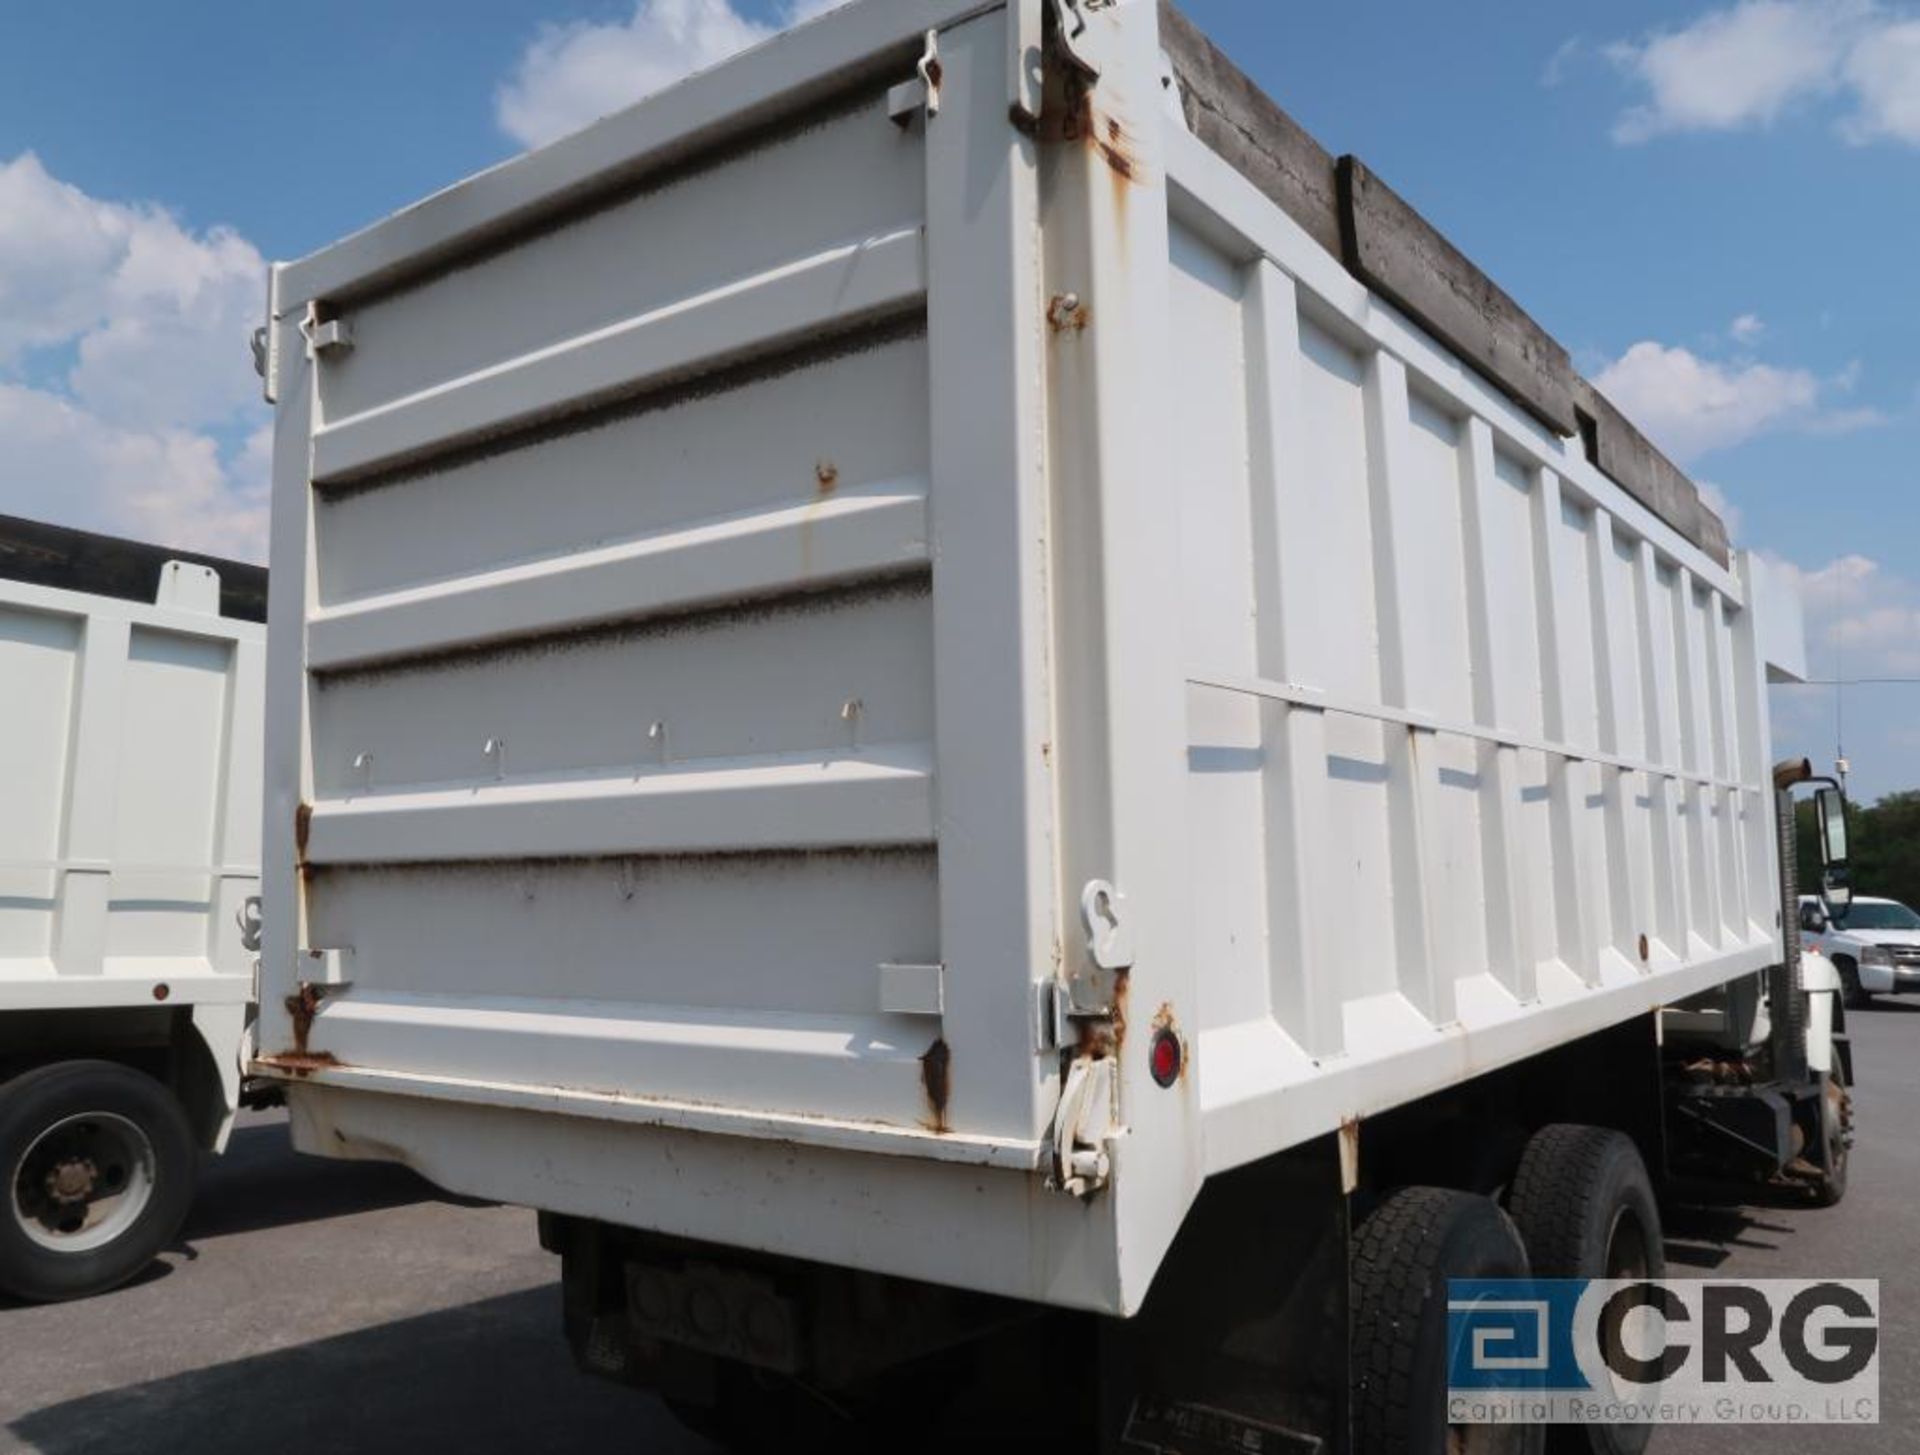 2018 International 7400 SBA dump truck, regular cab, 2 WD, AT, diesel, 22 ft x 8 ft dump box, tandem - Image 4 of 5